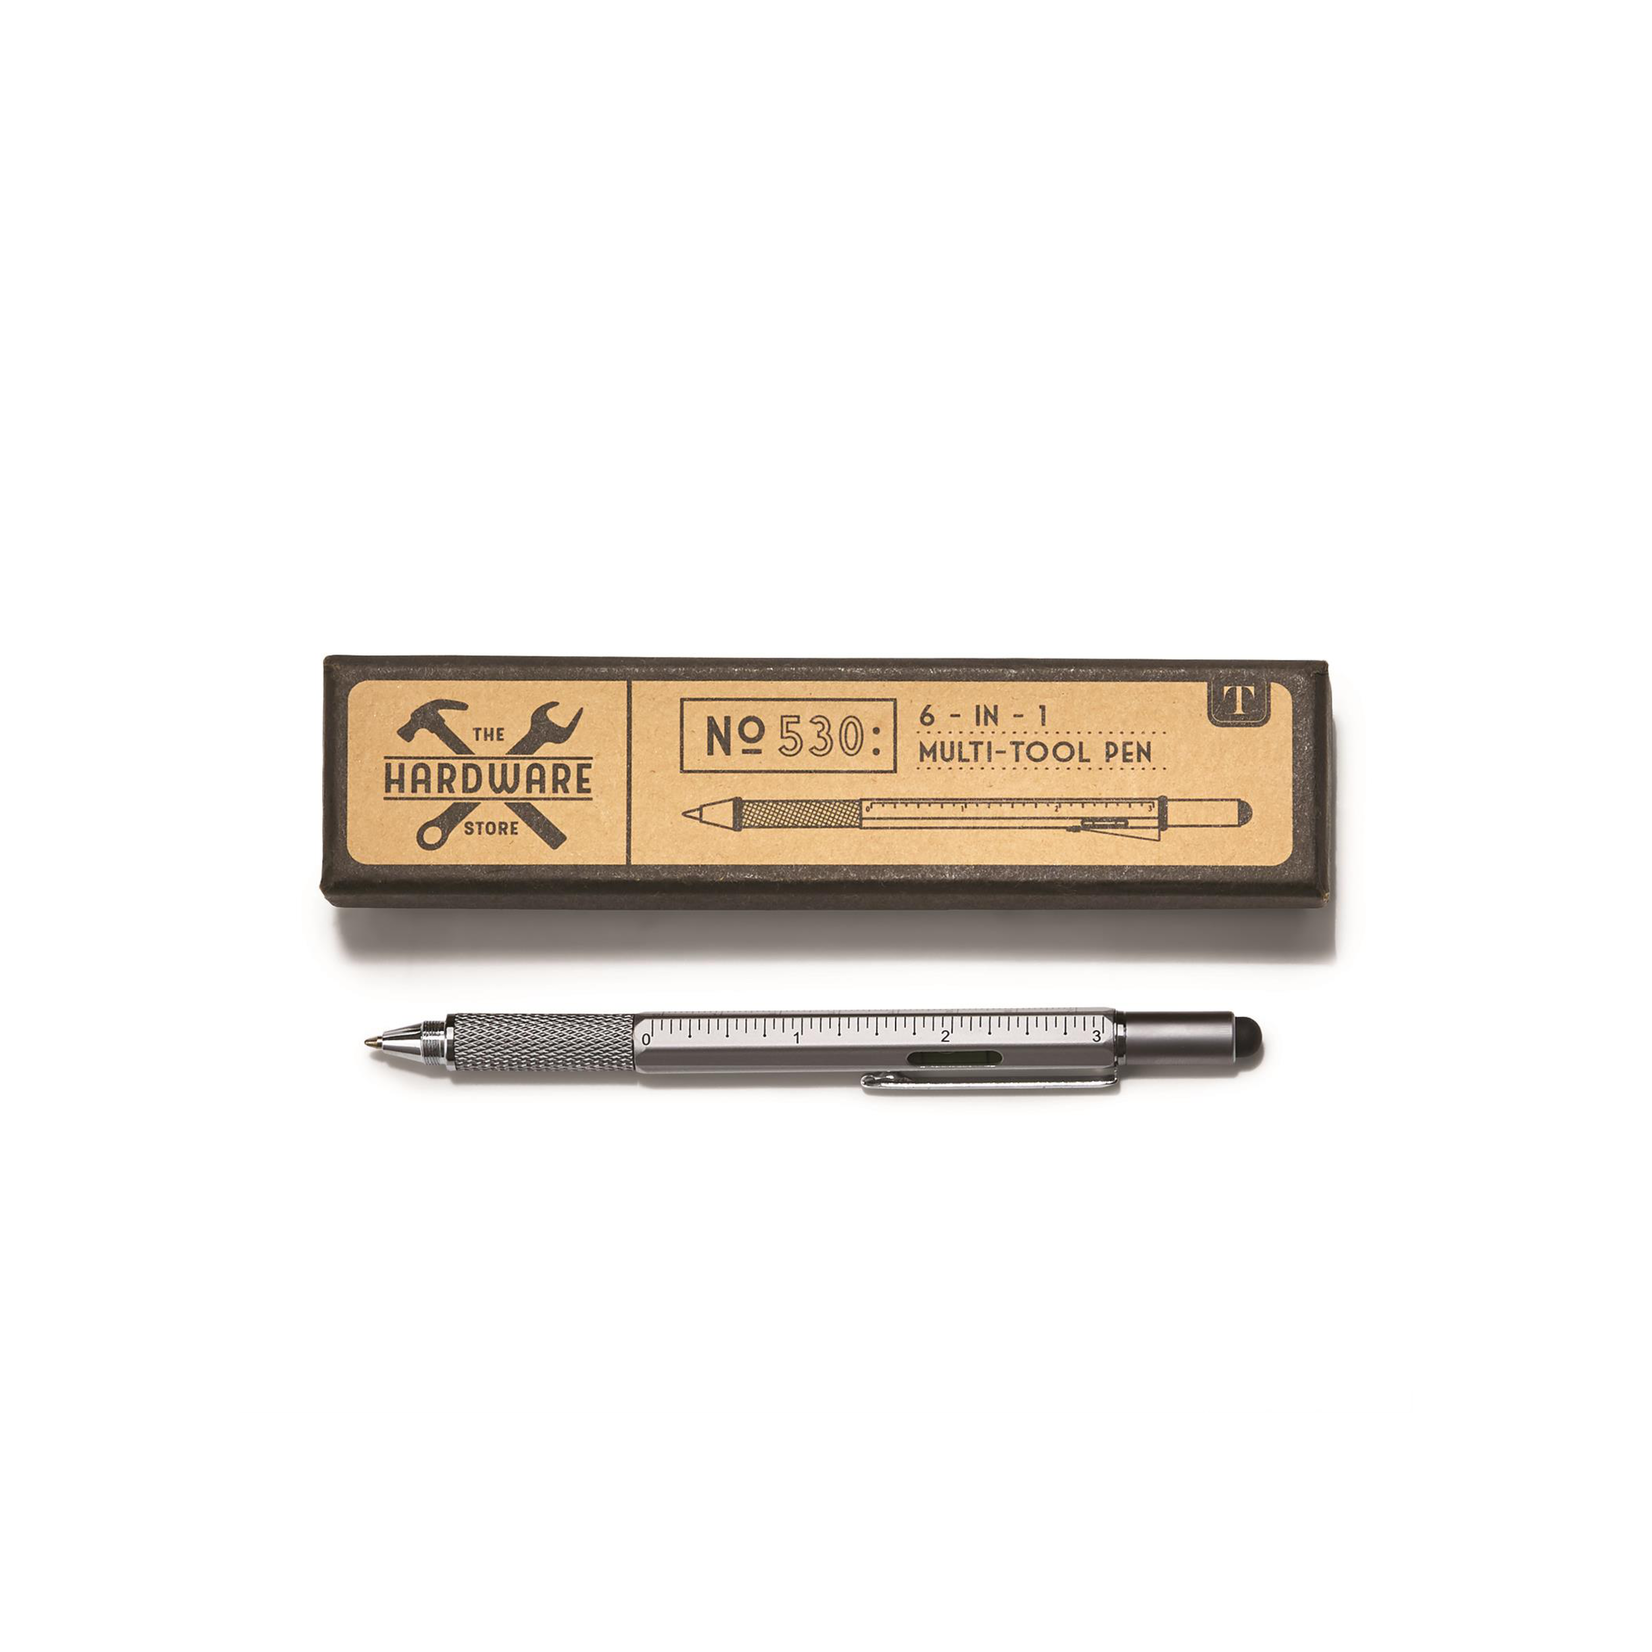 Two's Company, Inc. 6-in-1 Multi Tool Pen